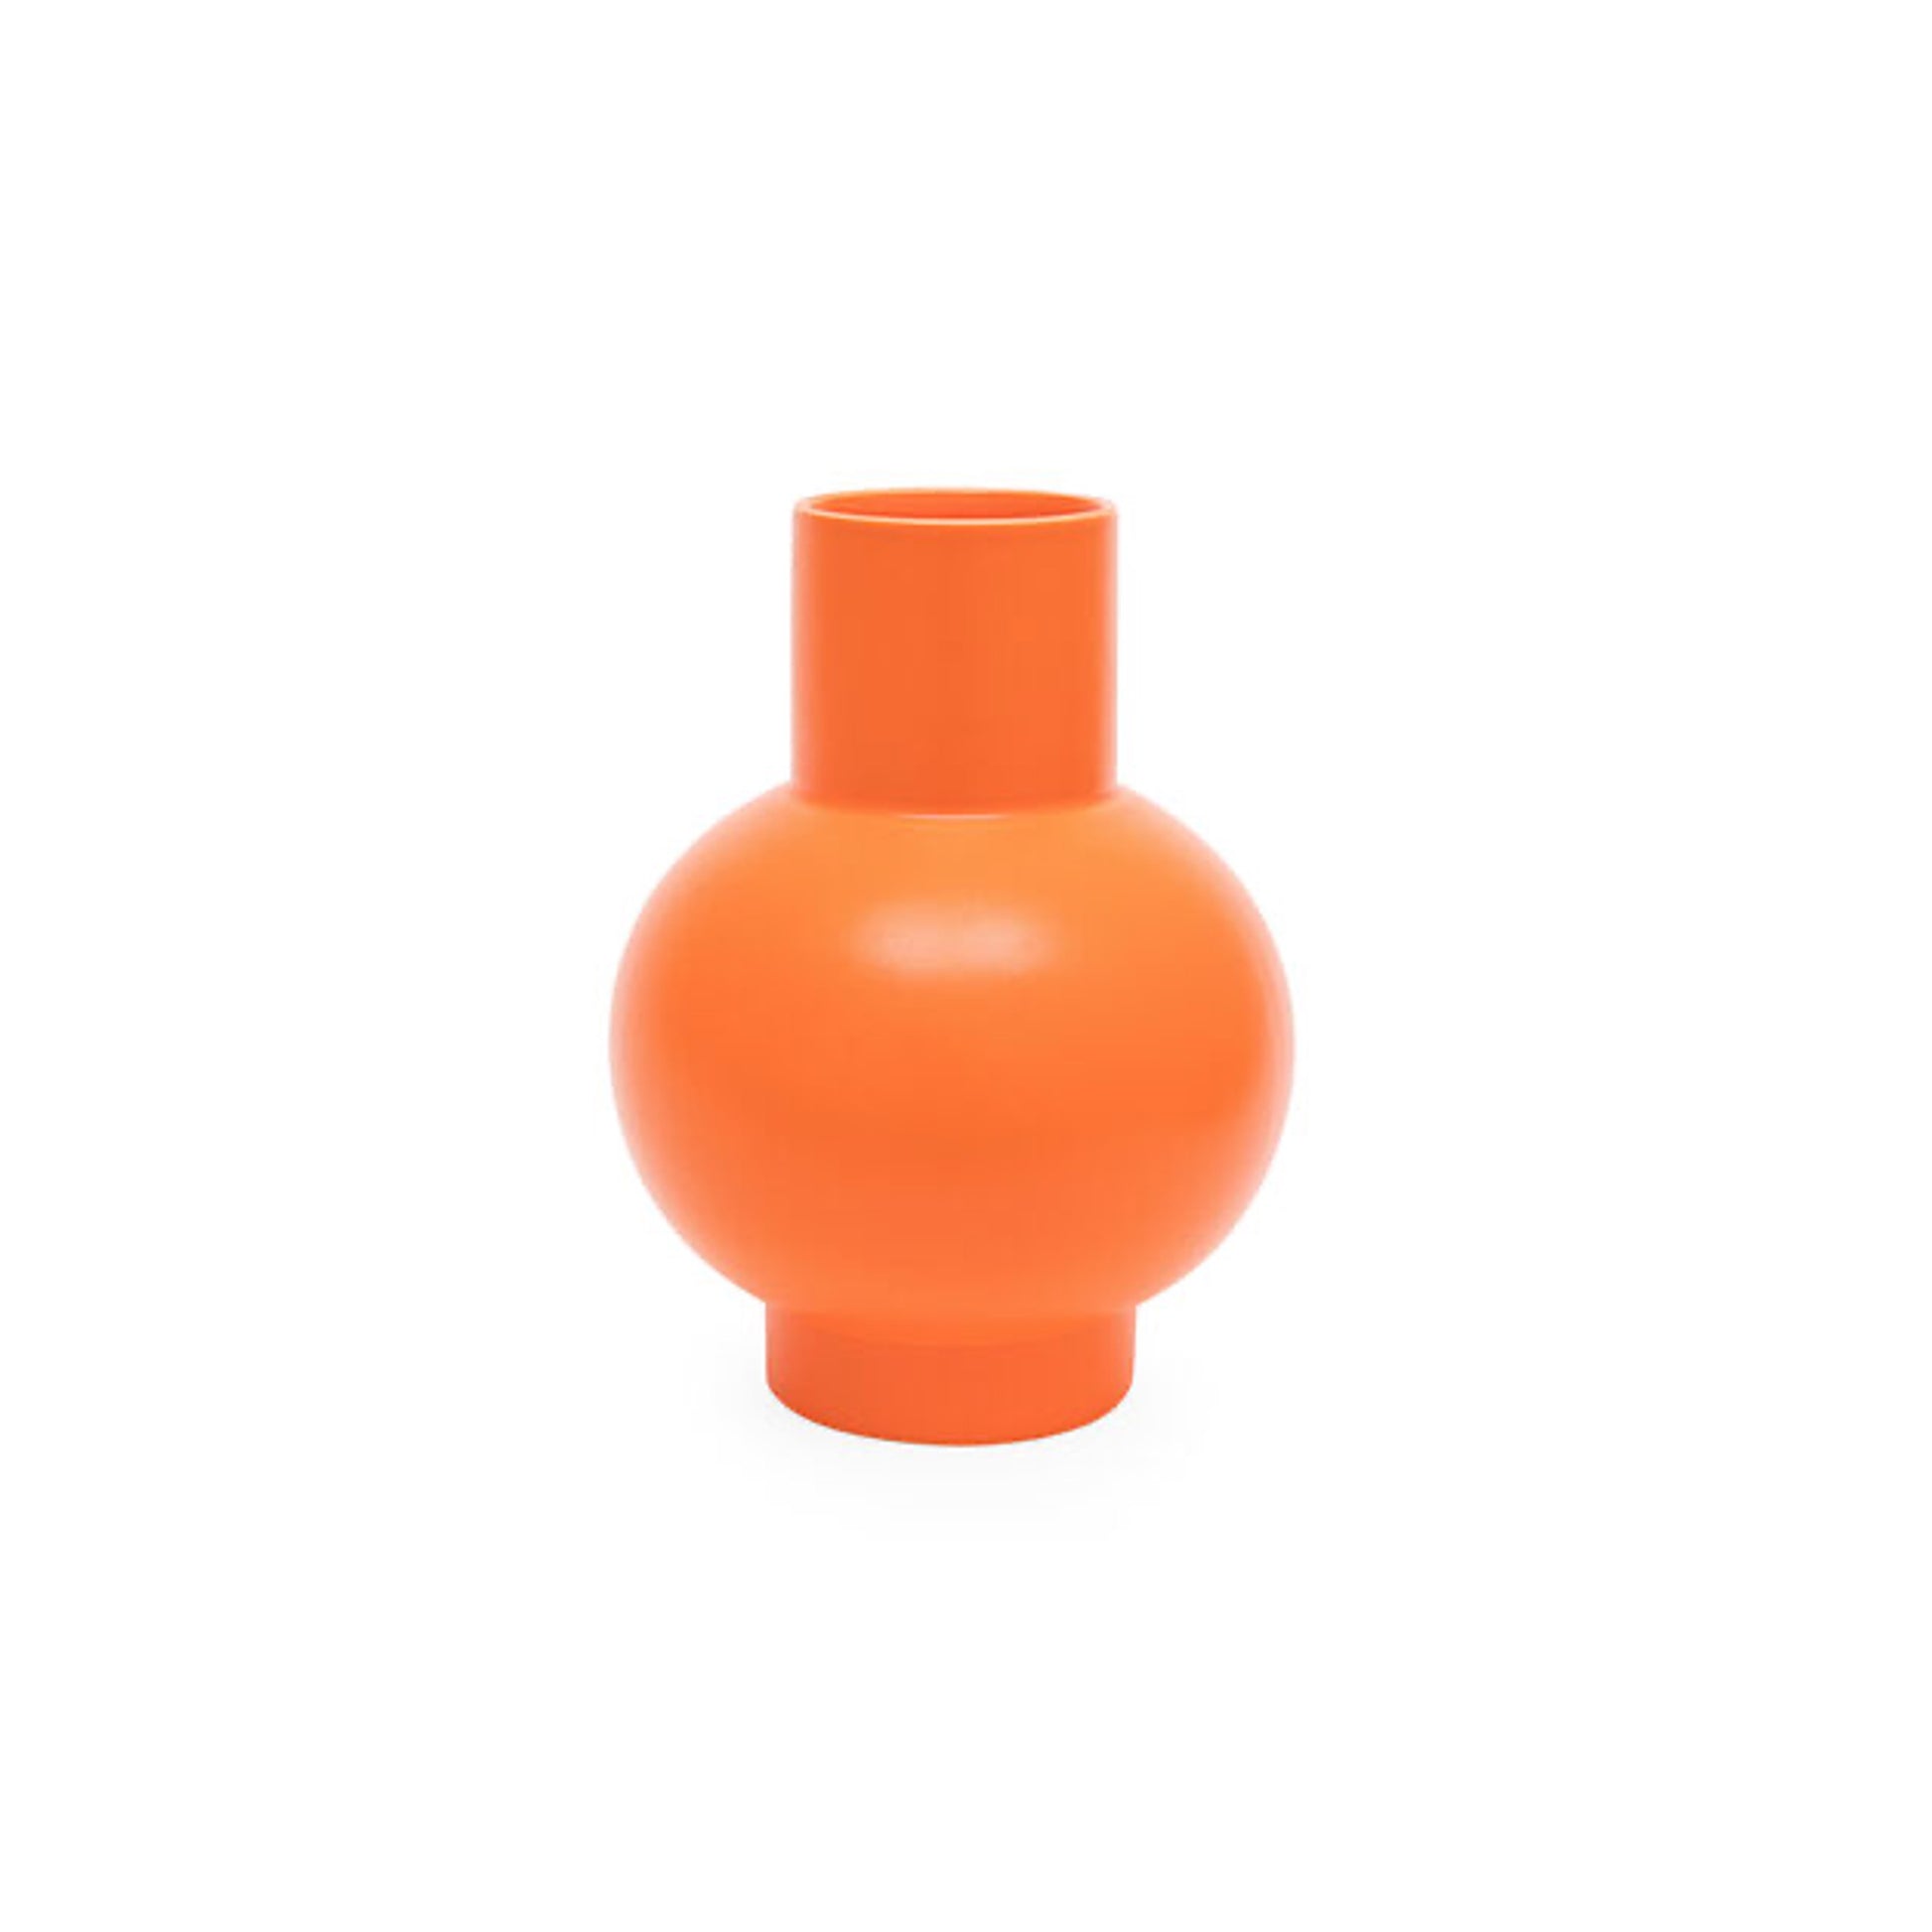 Vibrant orange colored modern vase